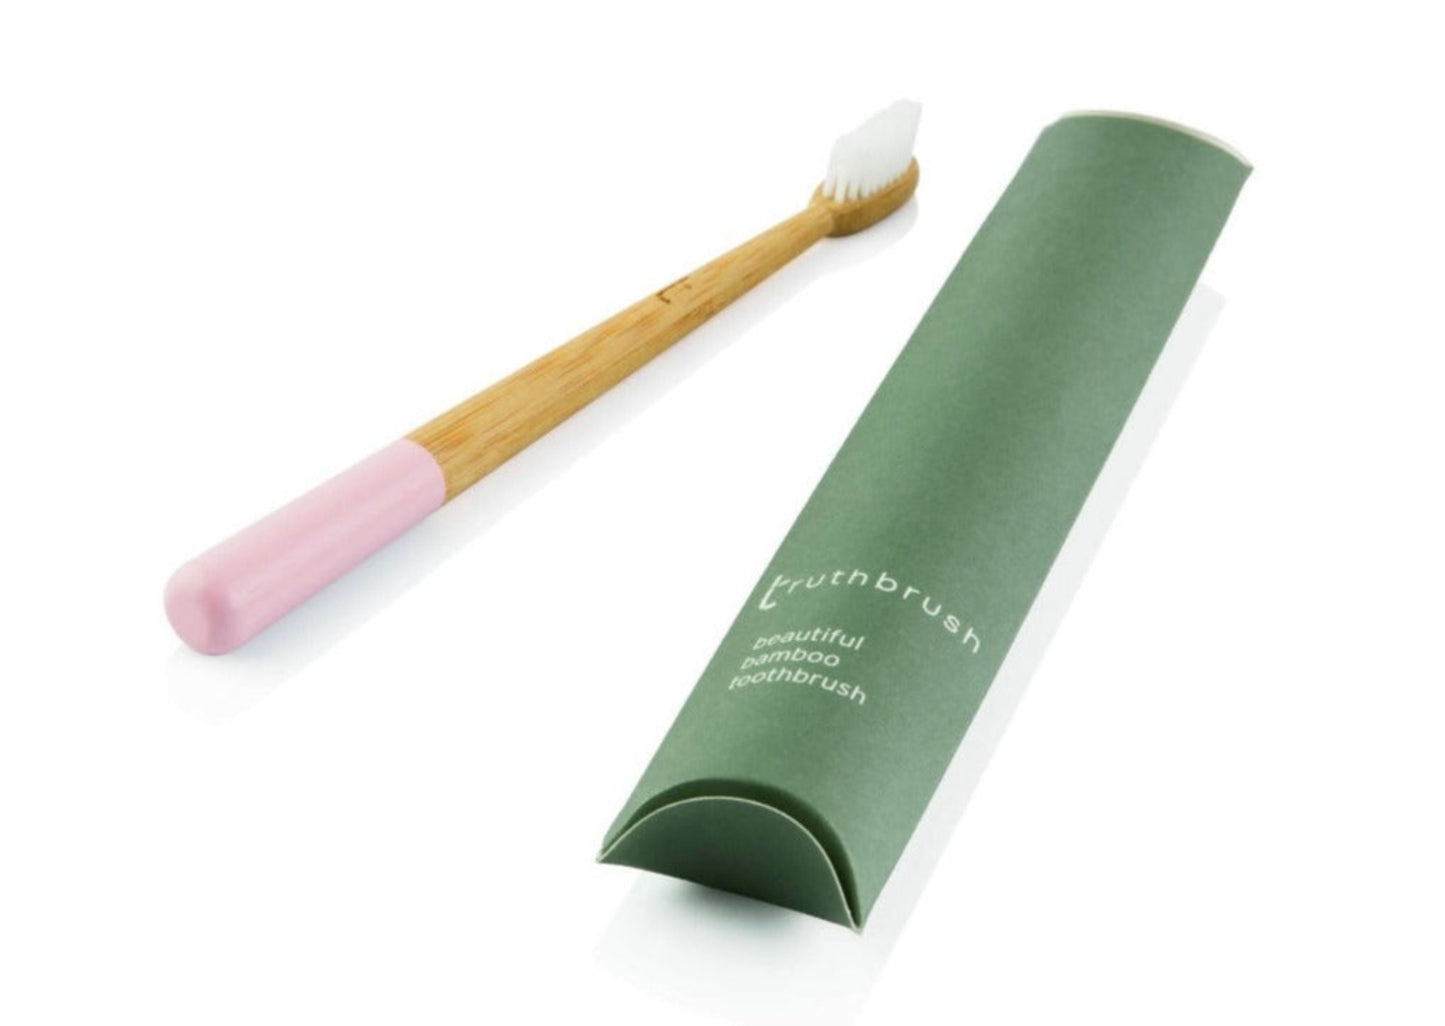 Truthbrush Bamboo Toothbrush - Medium Plant Based Bristles